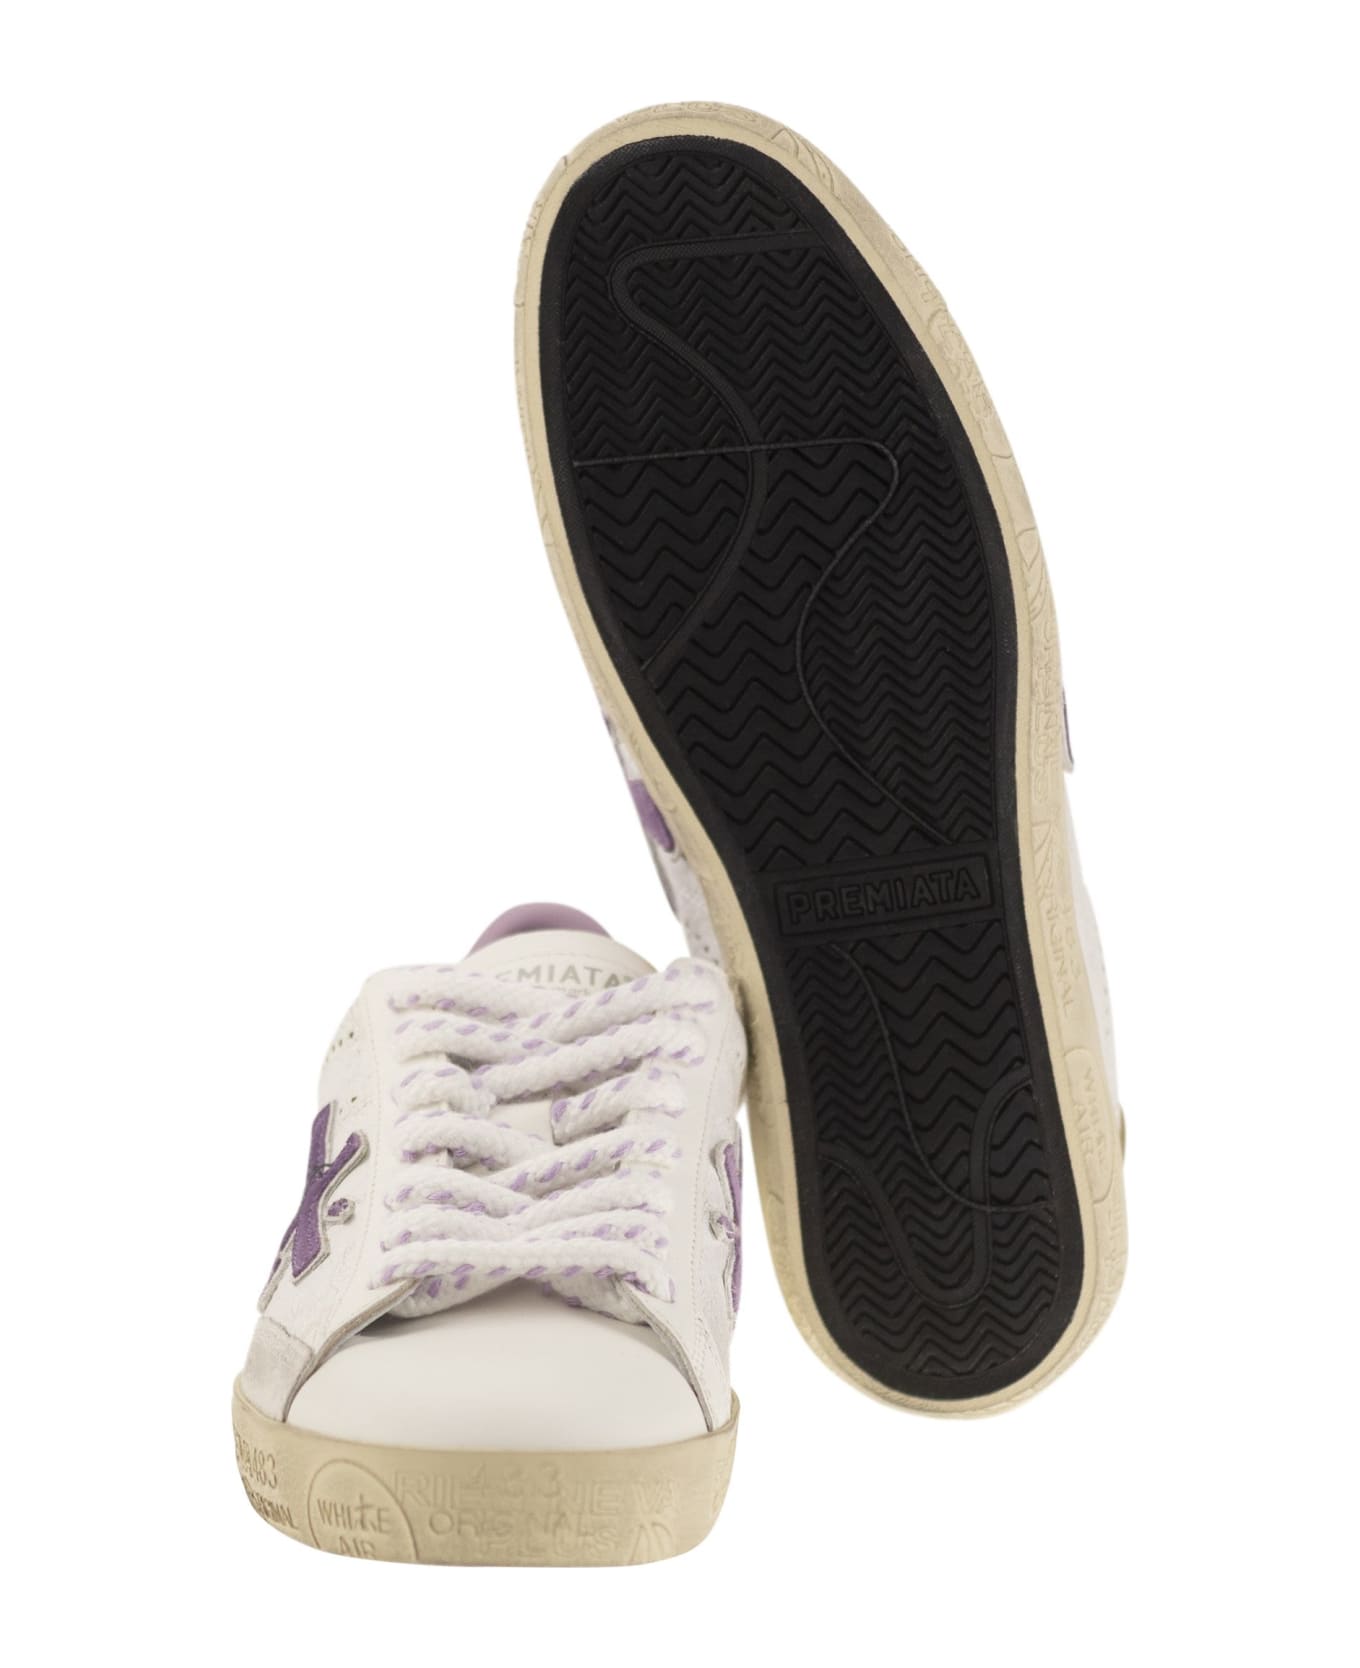 Premiata Steven-d - Sneakers - White/purple スニーカー